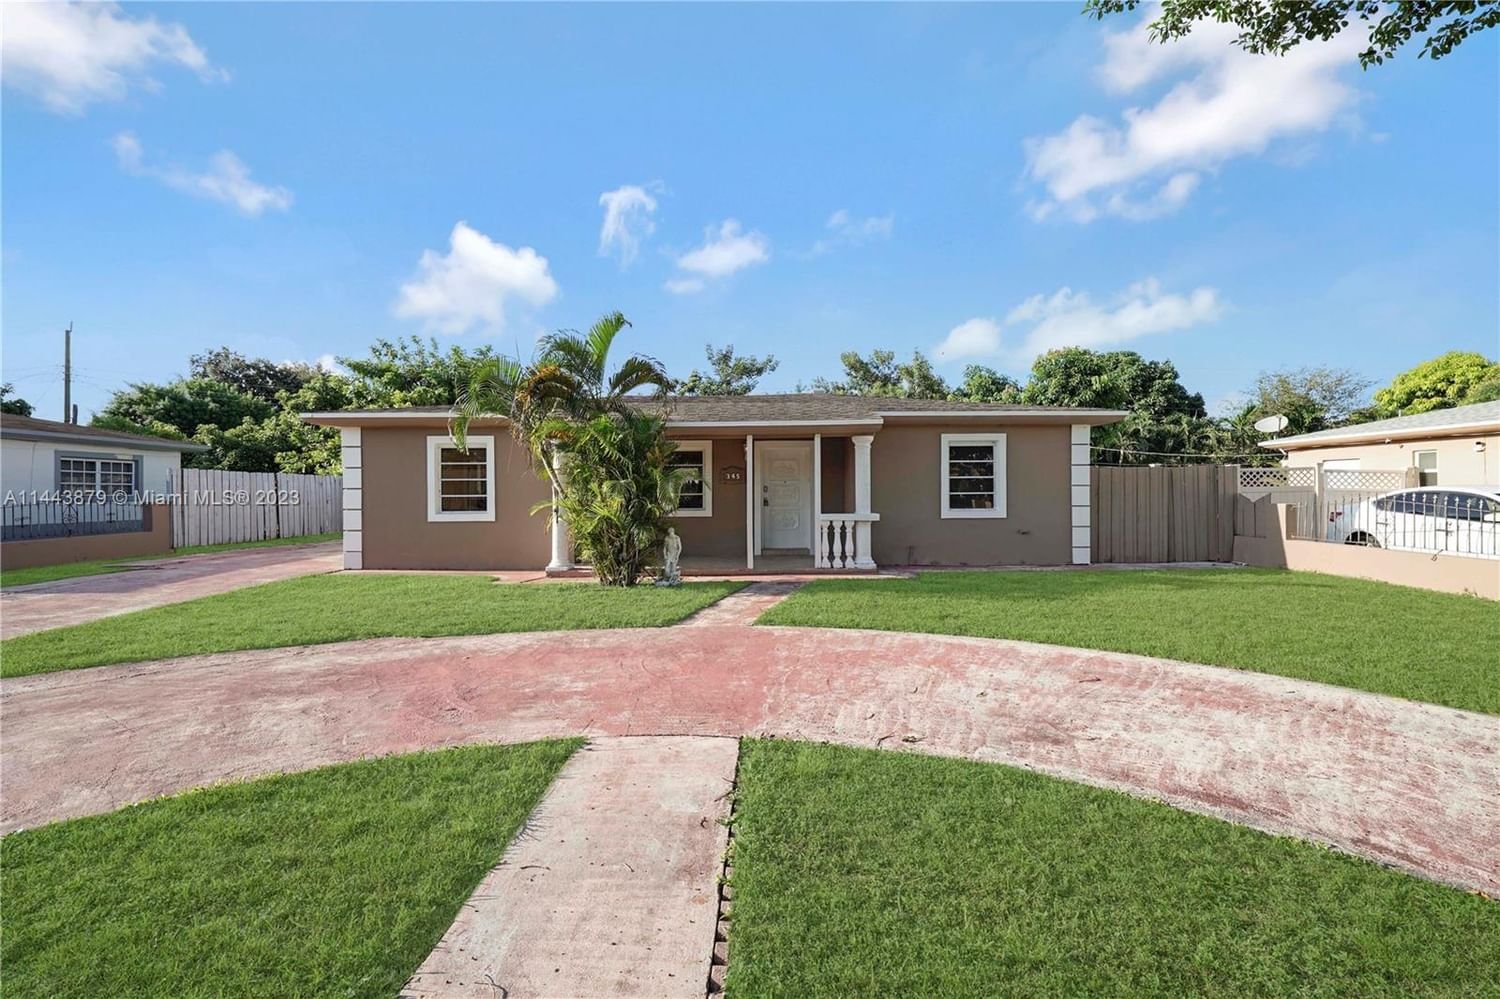 Real estate property located at 345 189th Ter, Miami-Dade County, Miami Gardens, FL